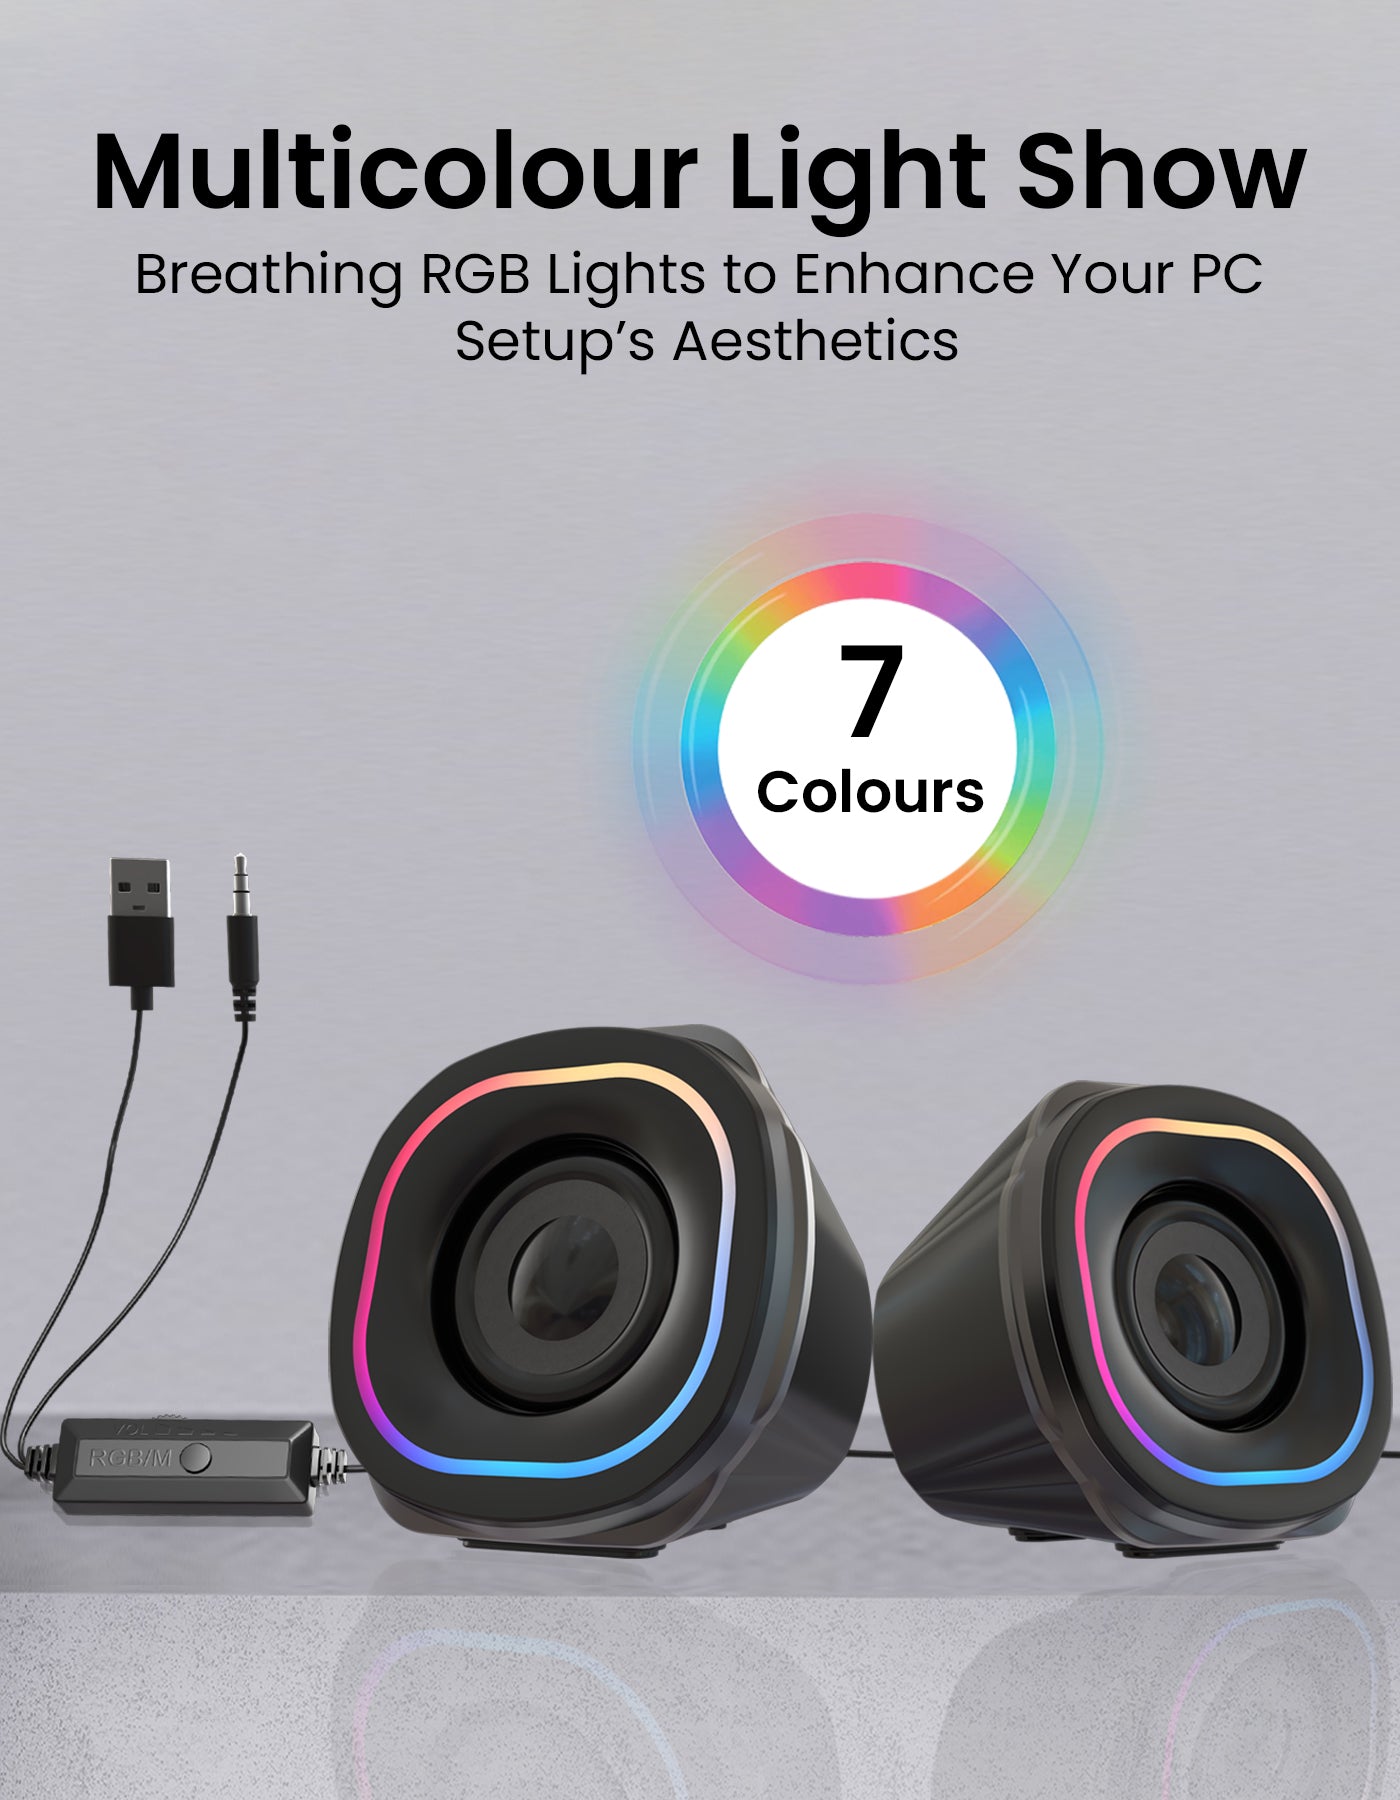 Portronics In Tune 5 Portable speaker Soundbar has RGB lights